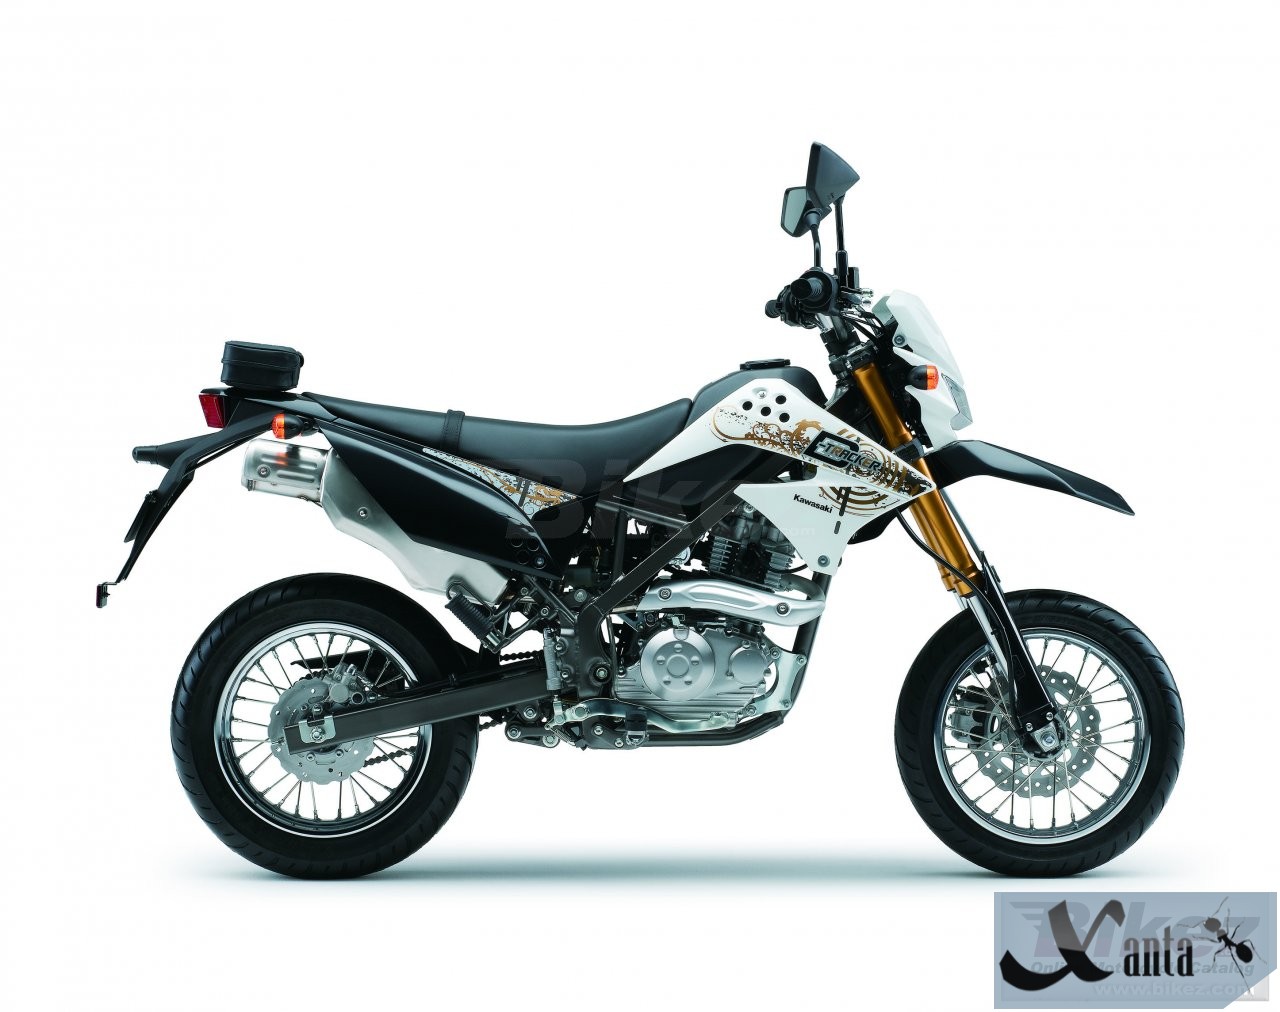 Мотард kawasaki d-tracker 250 — для начинающих в мотокроссе